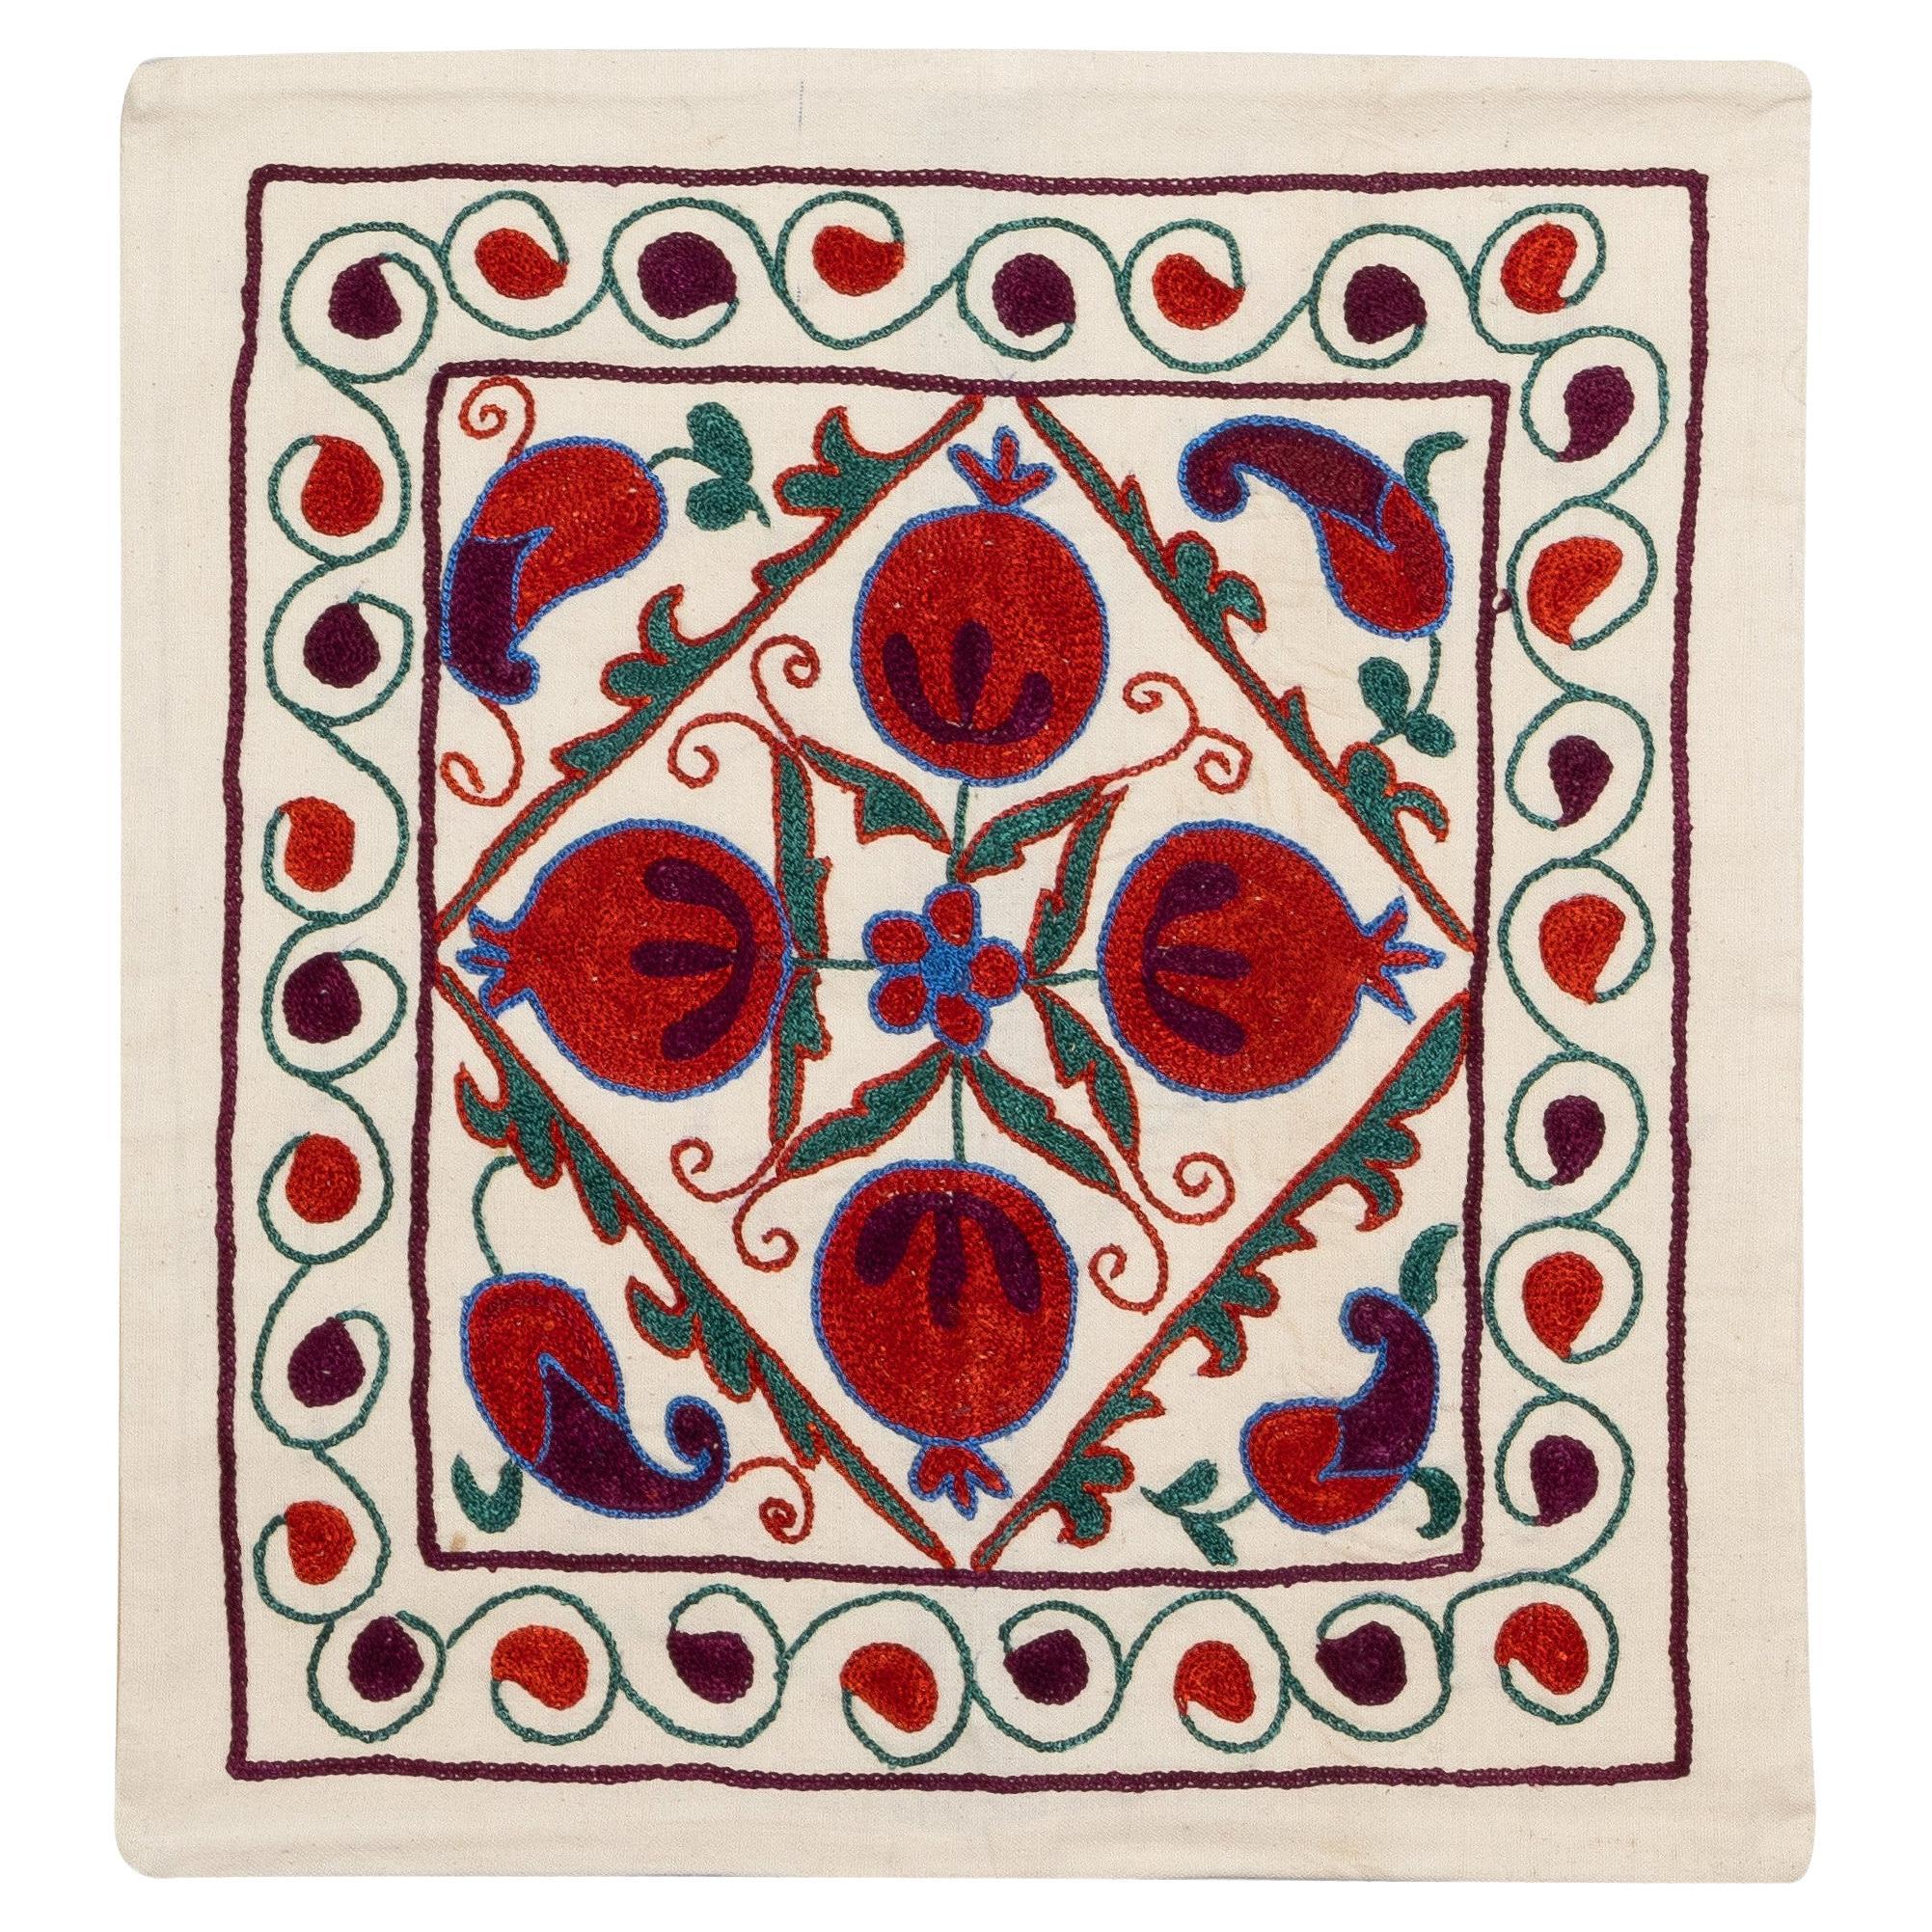 19"x19" 21st Century Suzani Cushion Cover, Uzbek Embroidered Silk Toss Pillow